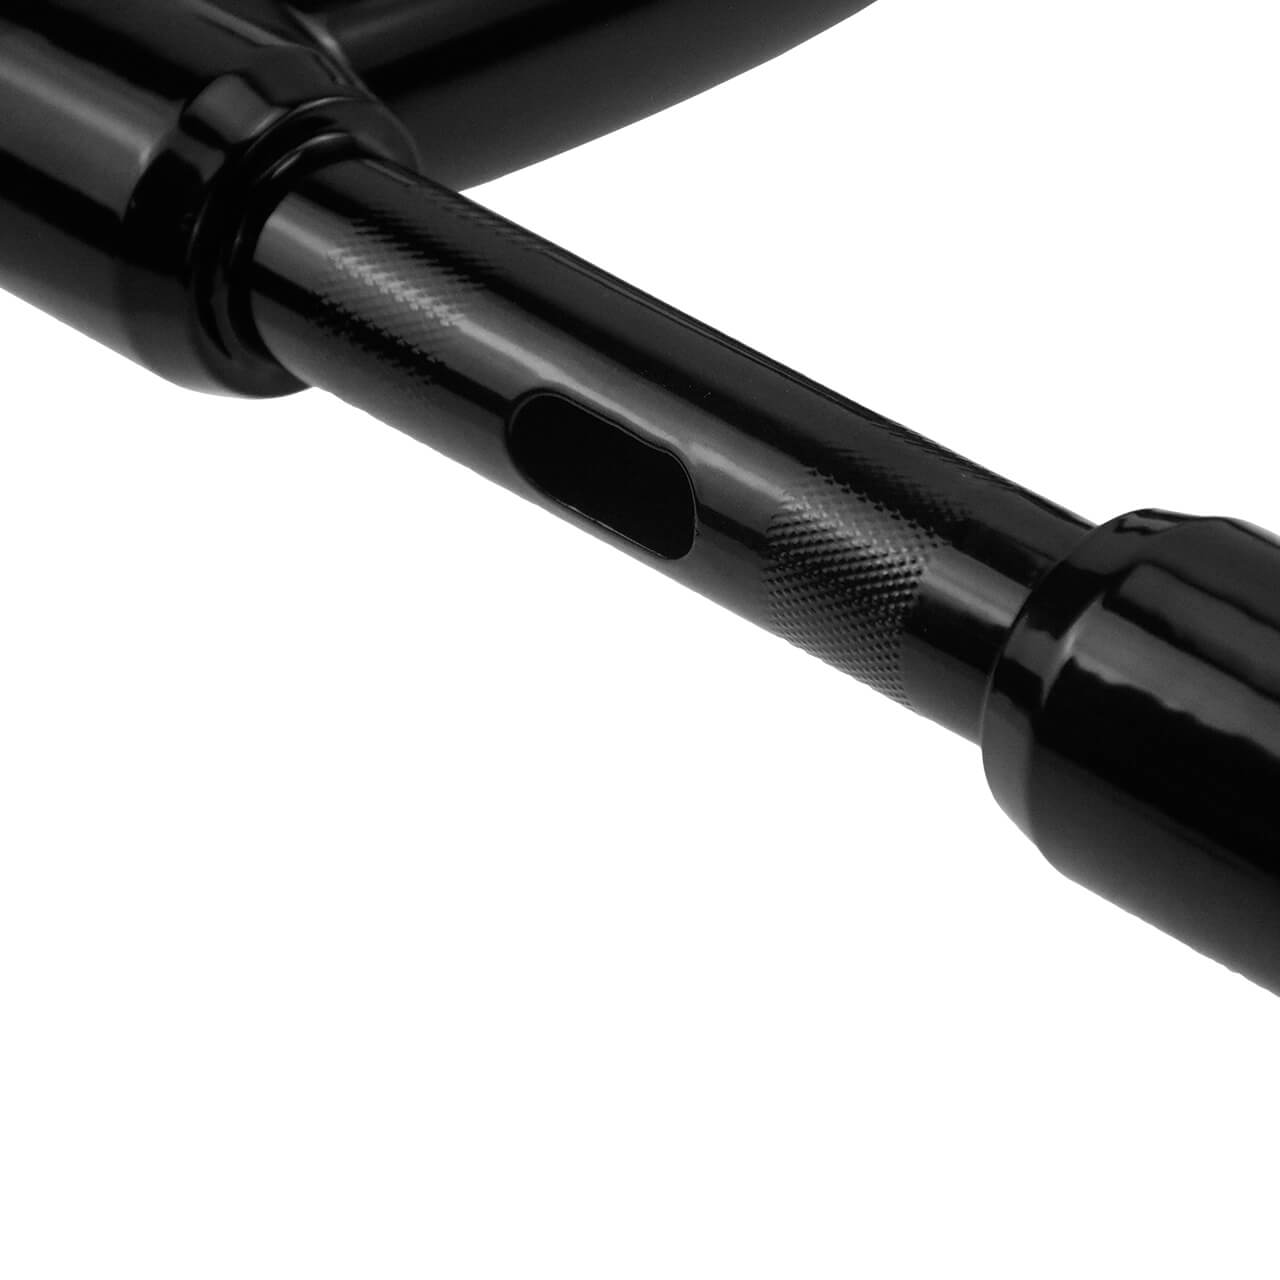 GP005003-mactions-harley-16inch-handlebar-black